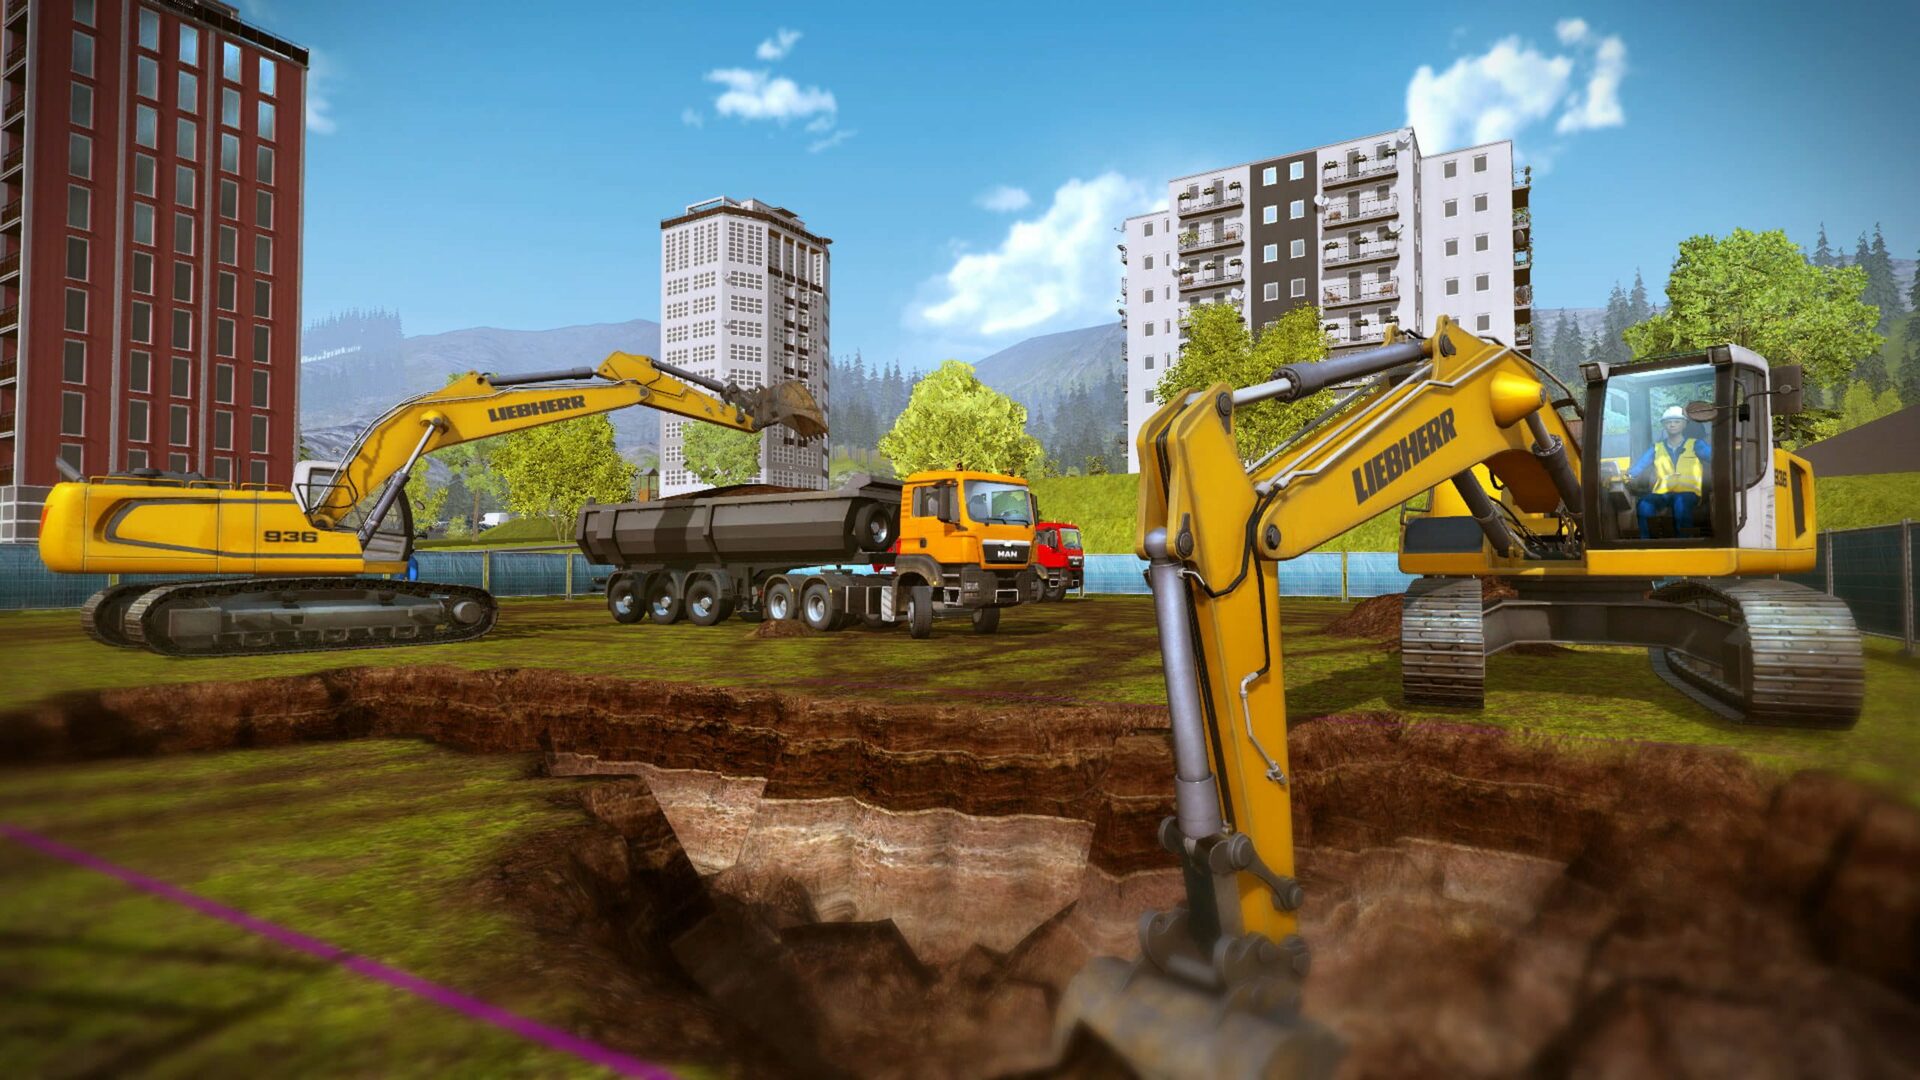 Bau Simulator 2015 Key - Construction Steam PC Download Code